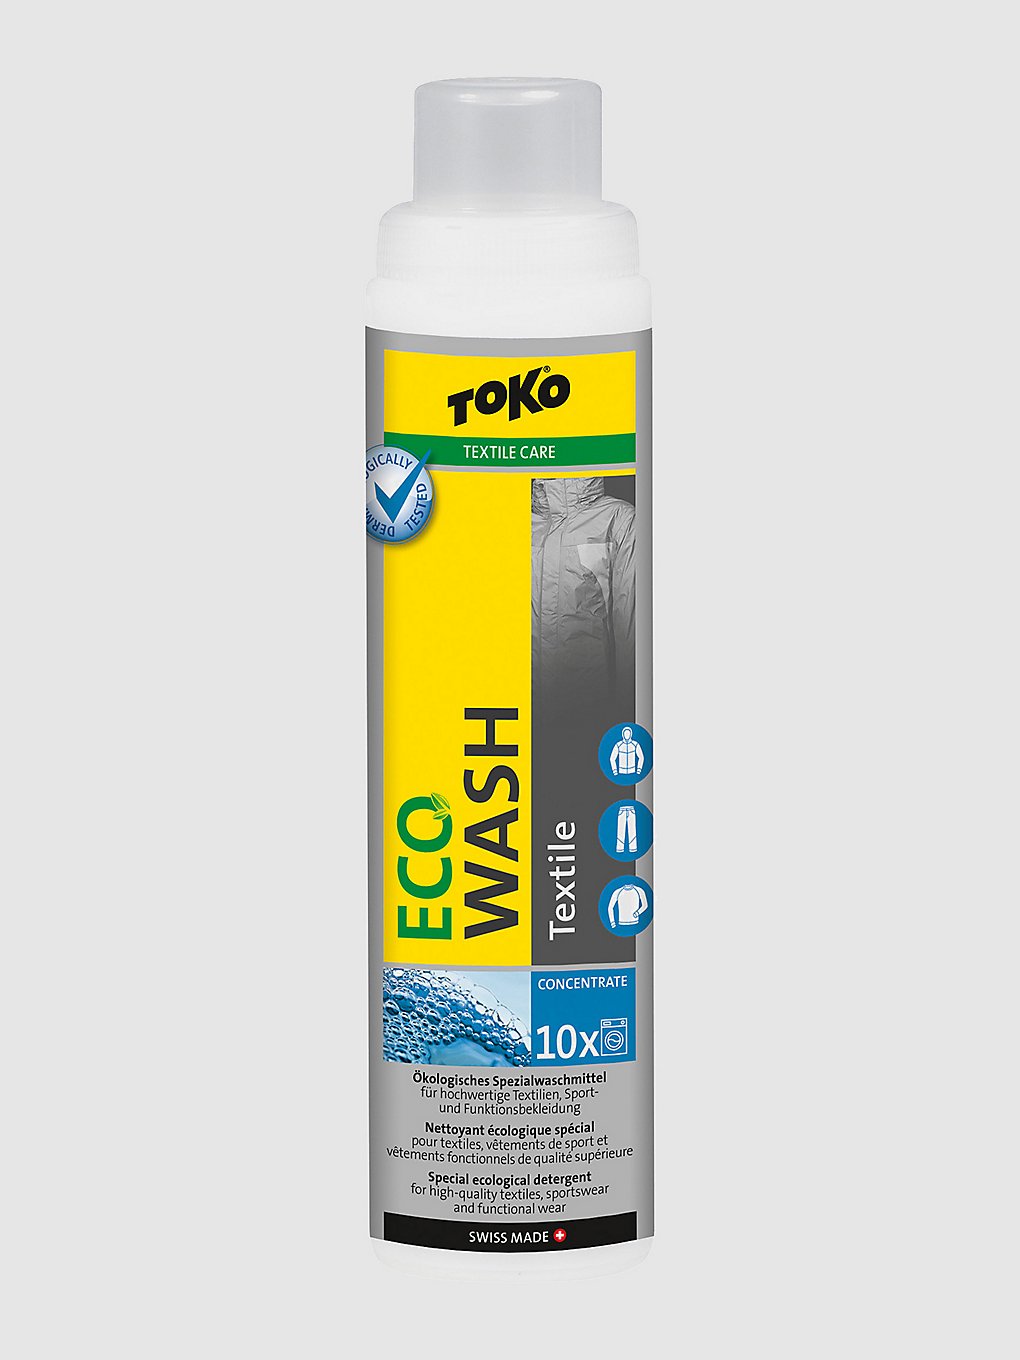 Toko Eco Textile Wash 250ml à motifs